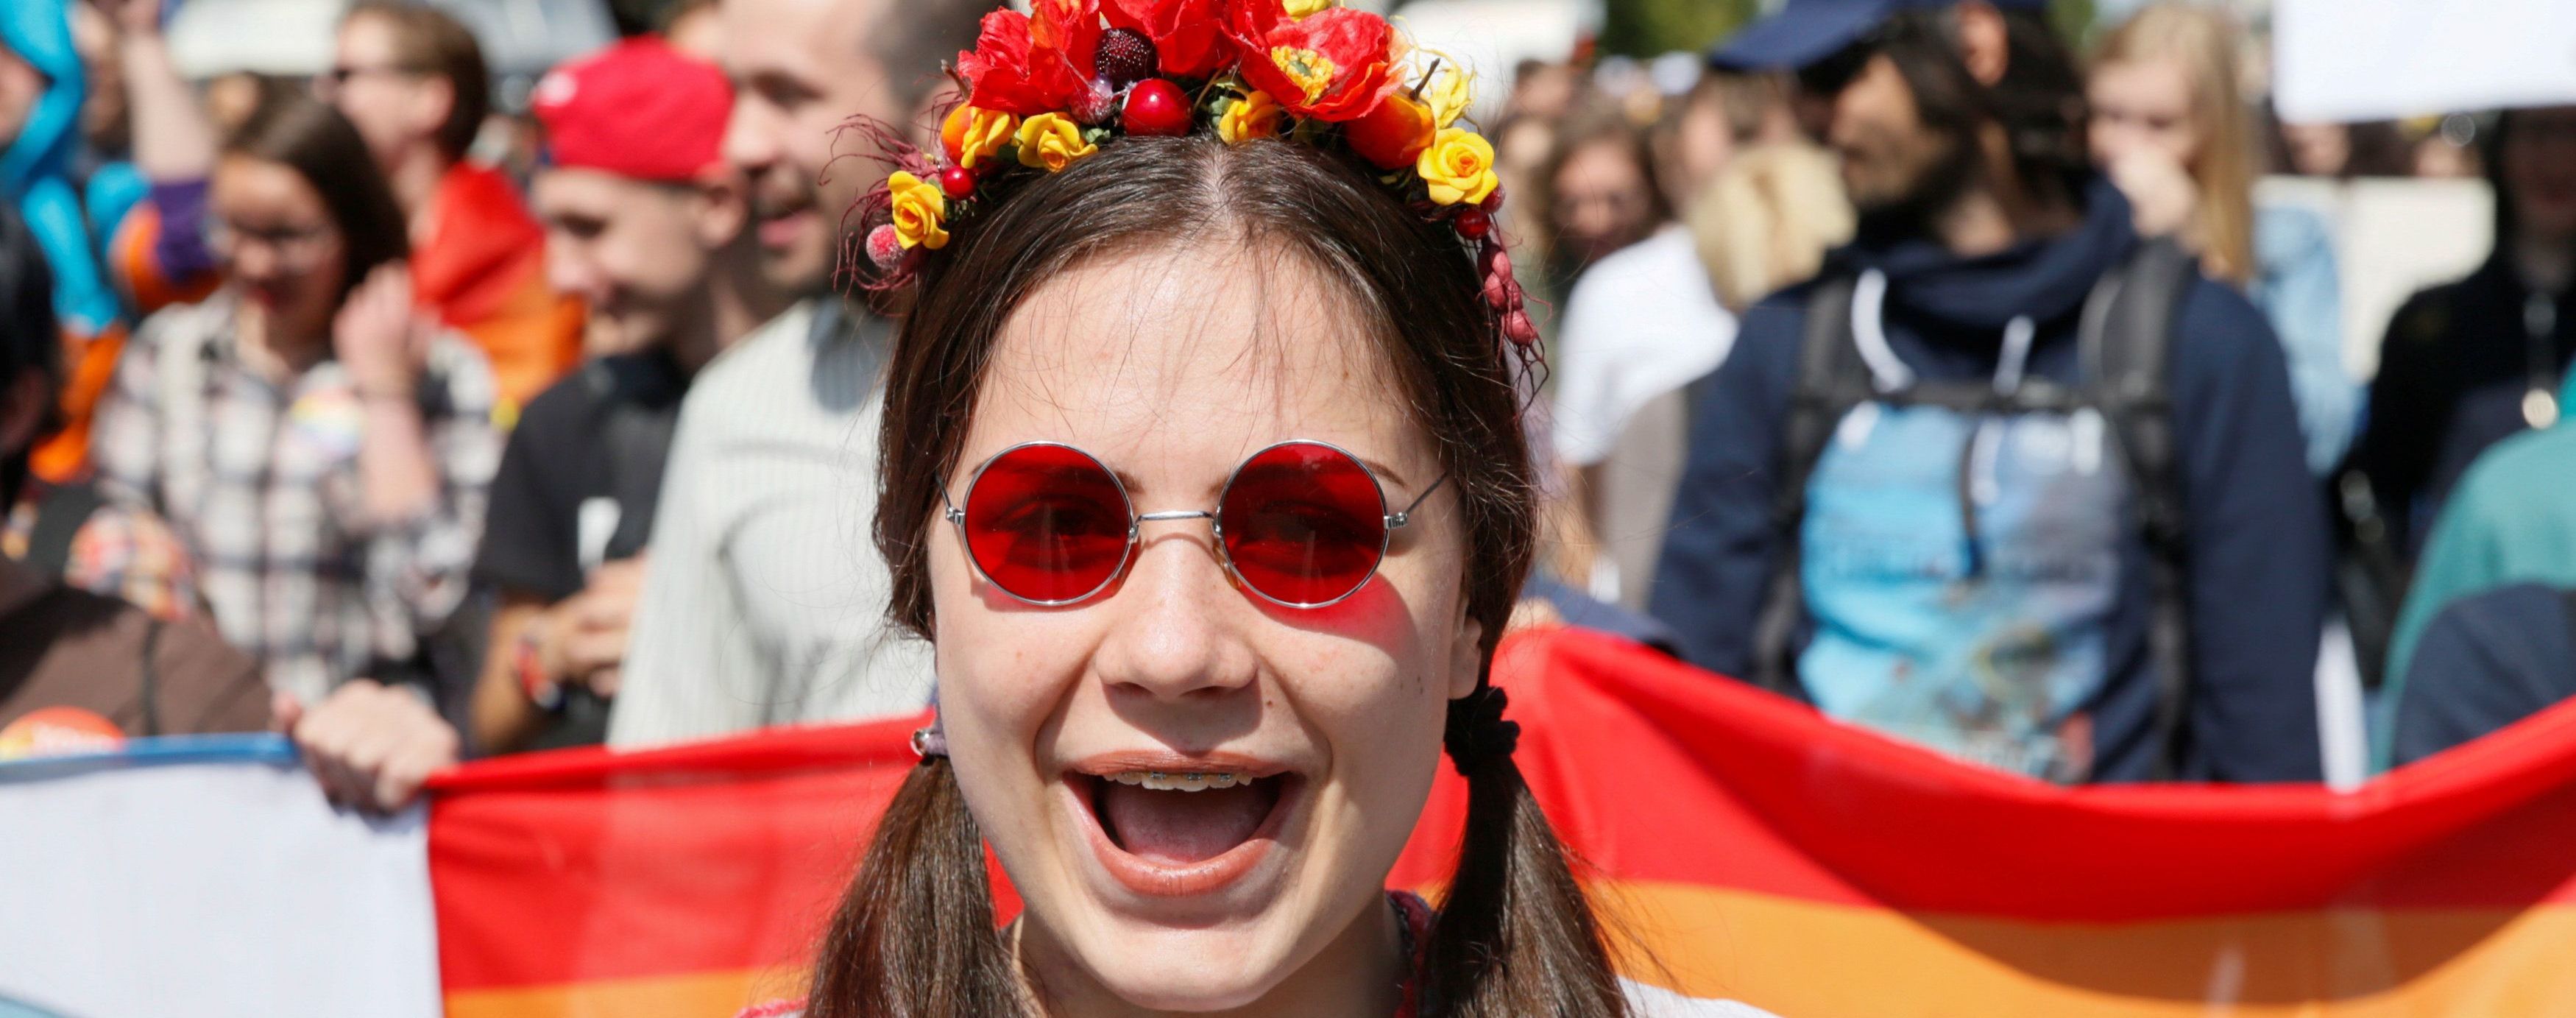 Марш равенства в Киеве, 11 июня / © Reuters